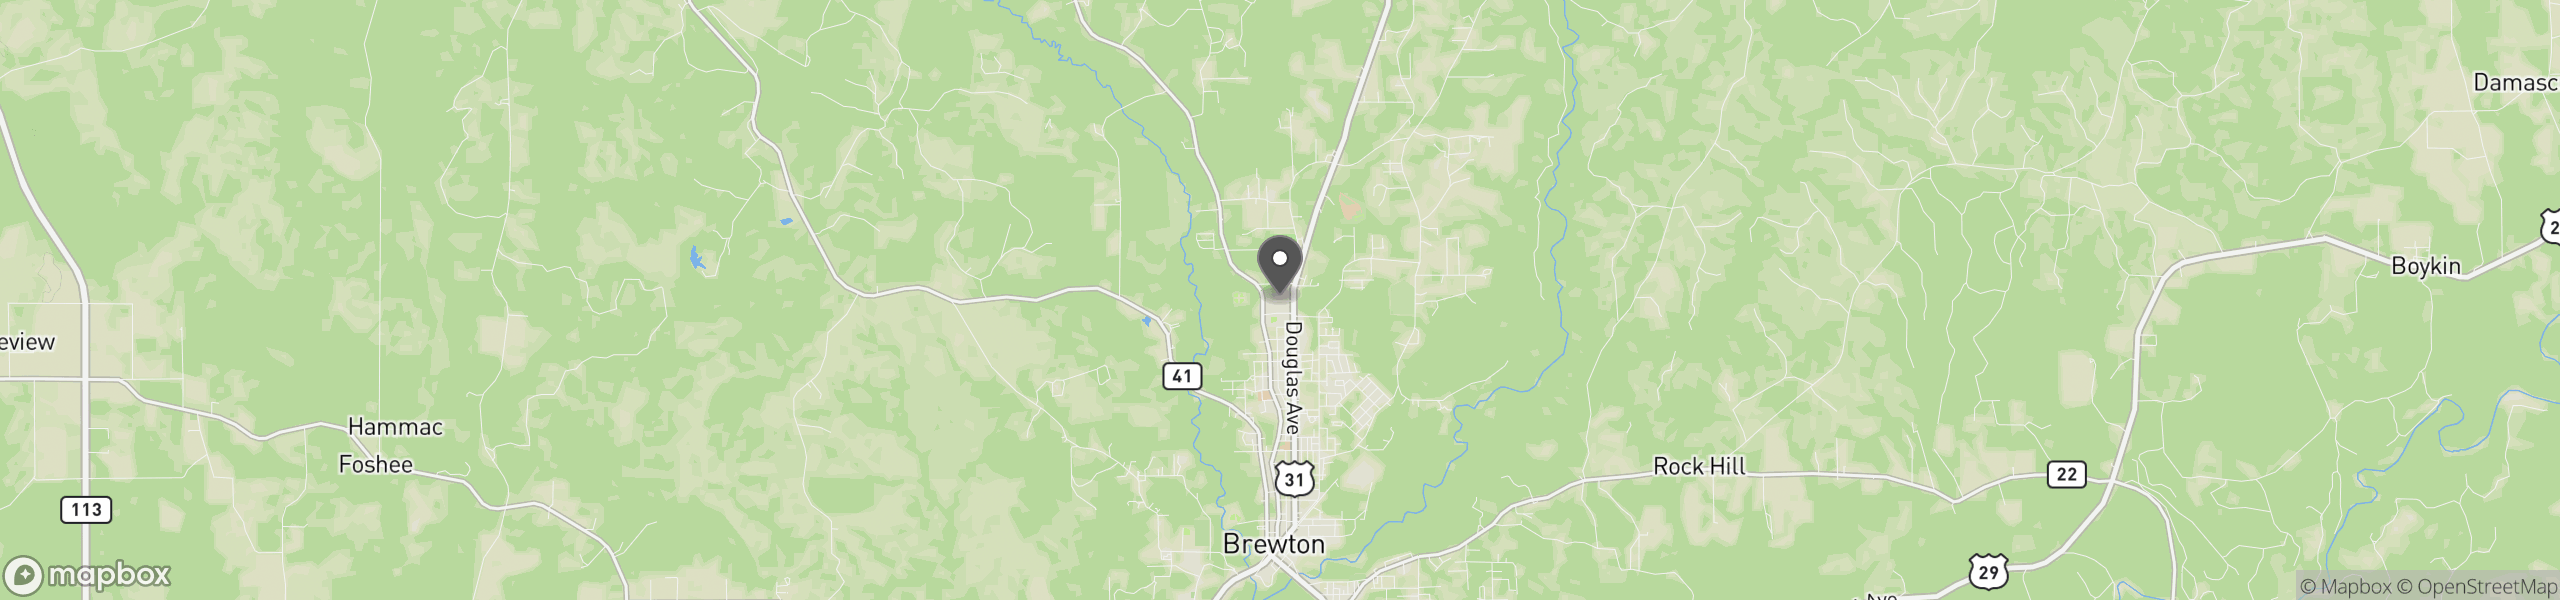 Brewton, AL 36426